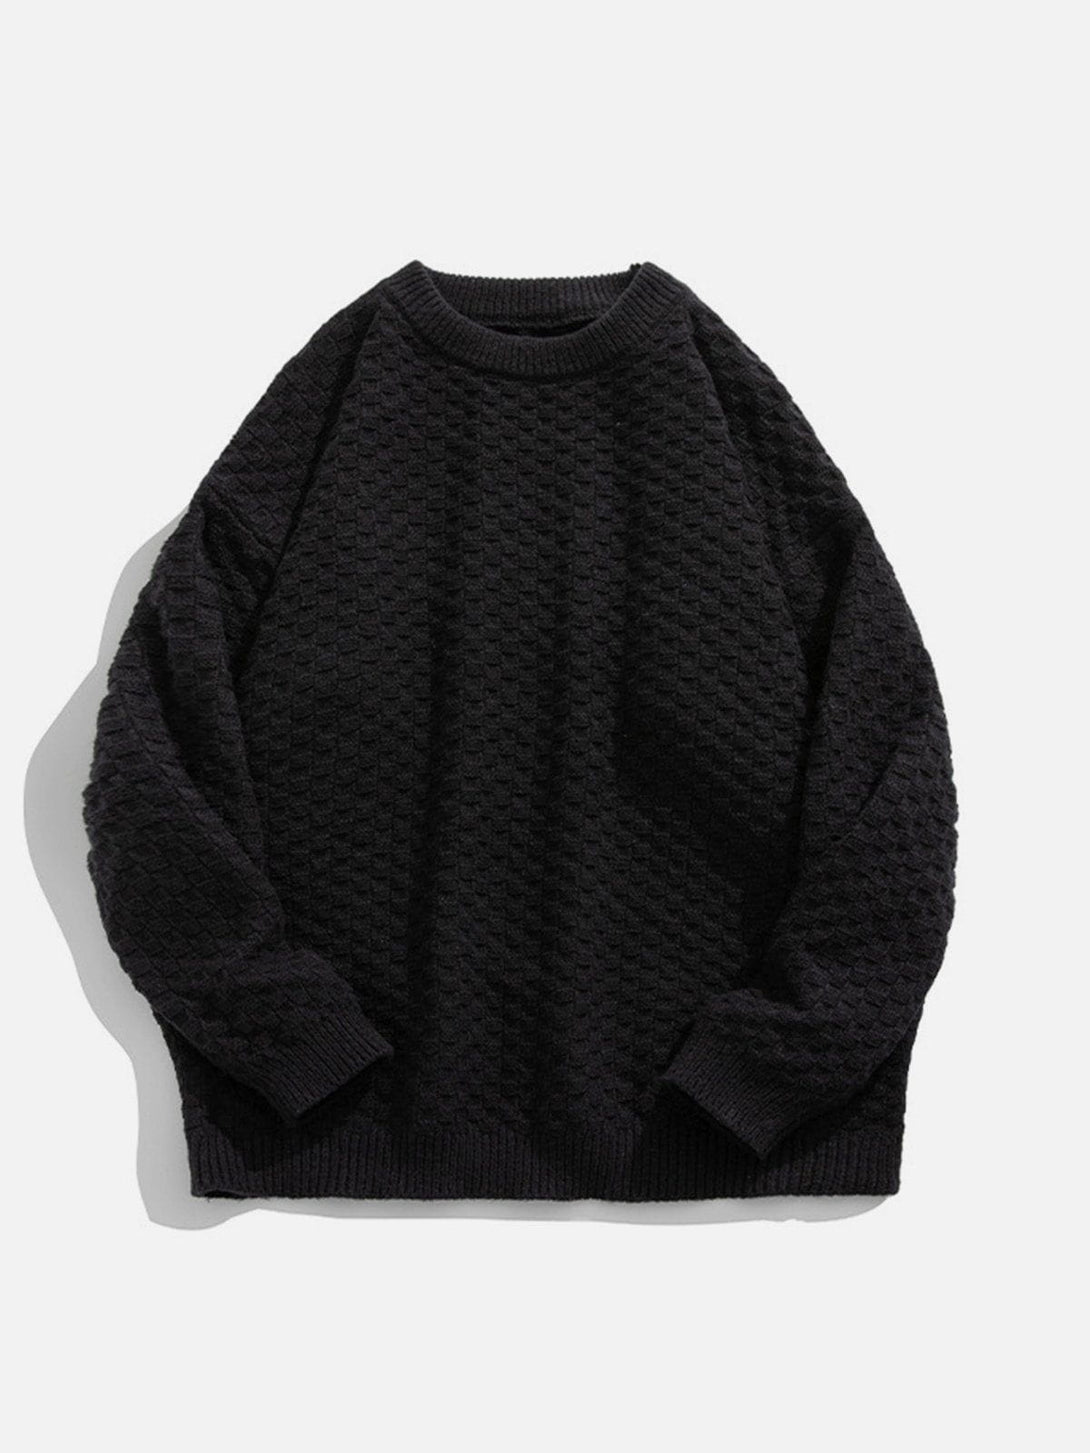 Evapacs - Textured Solid Color Sweater- Streetwear Fashion - evapacs.com